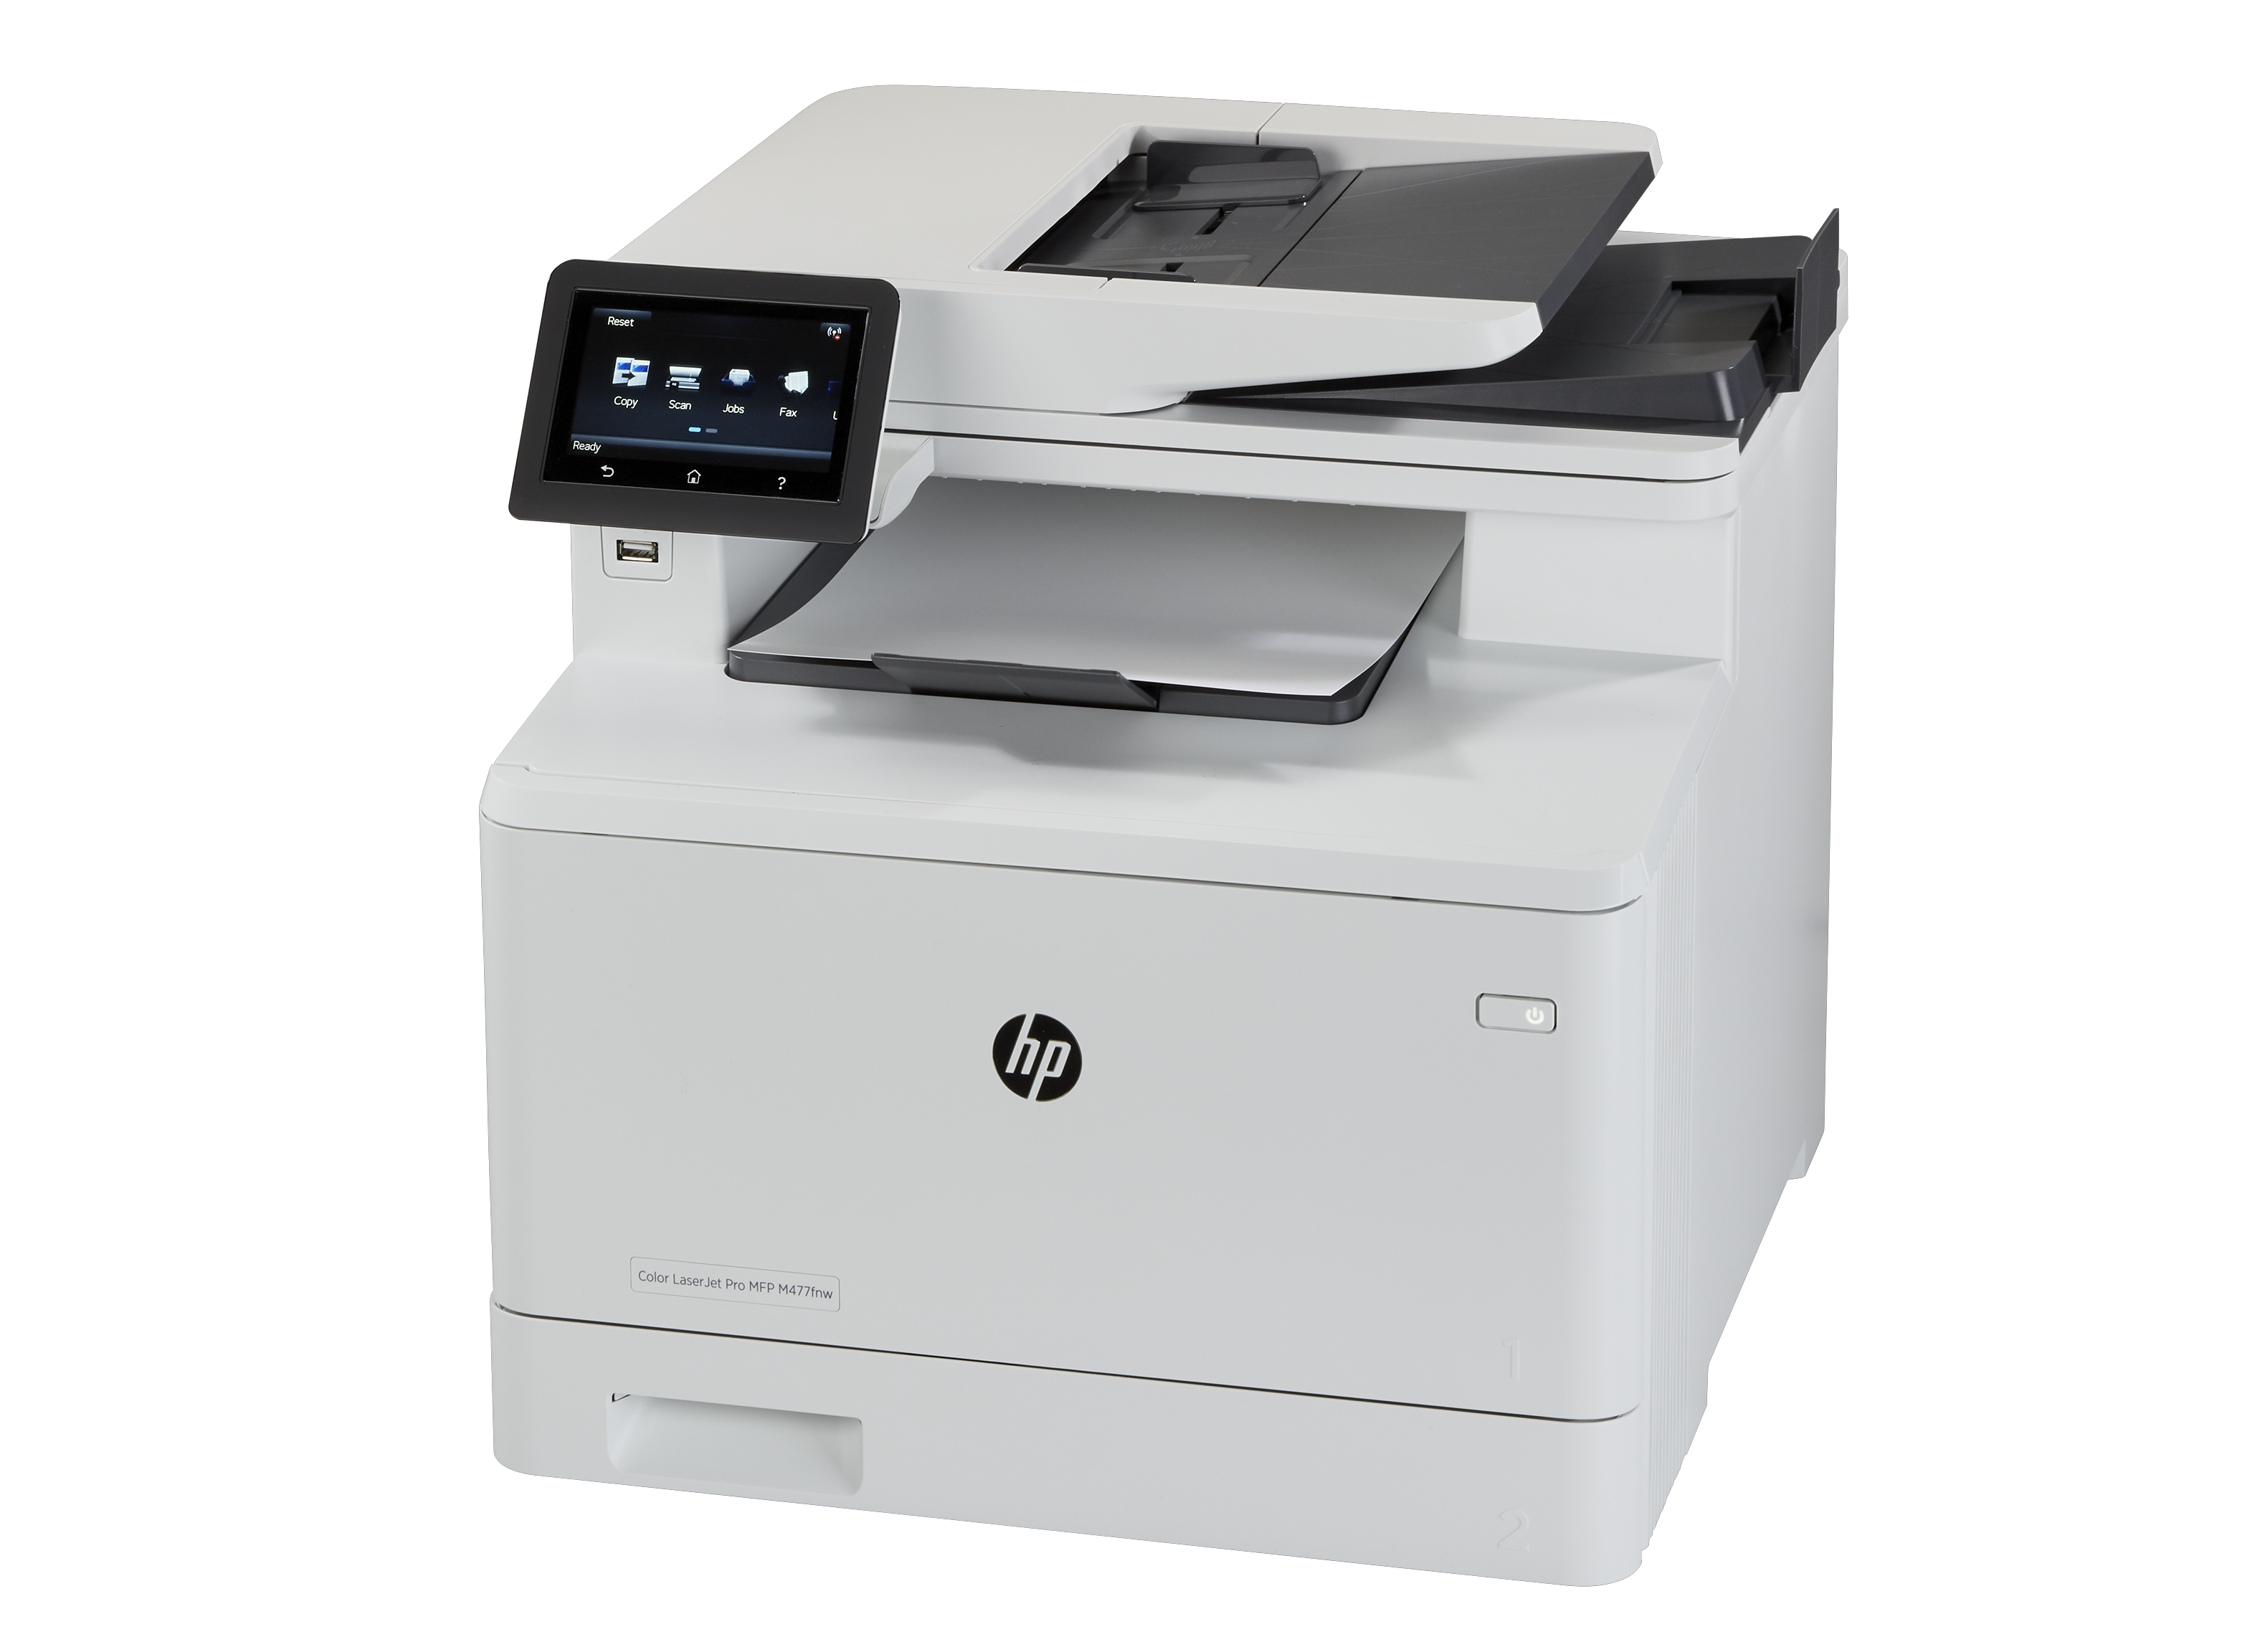 HP Color LaserJet Pro MFP M477fnw Printer - Consumer Reports